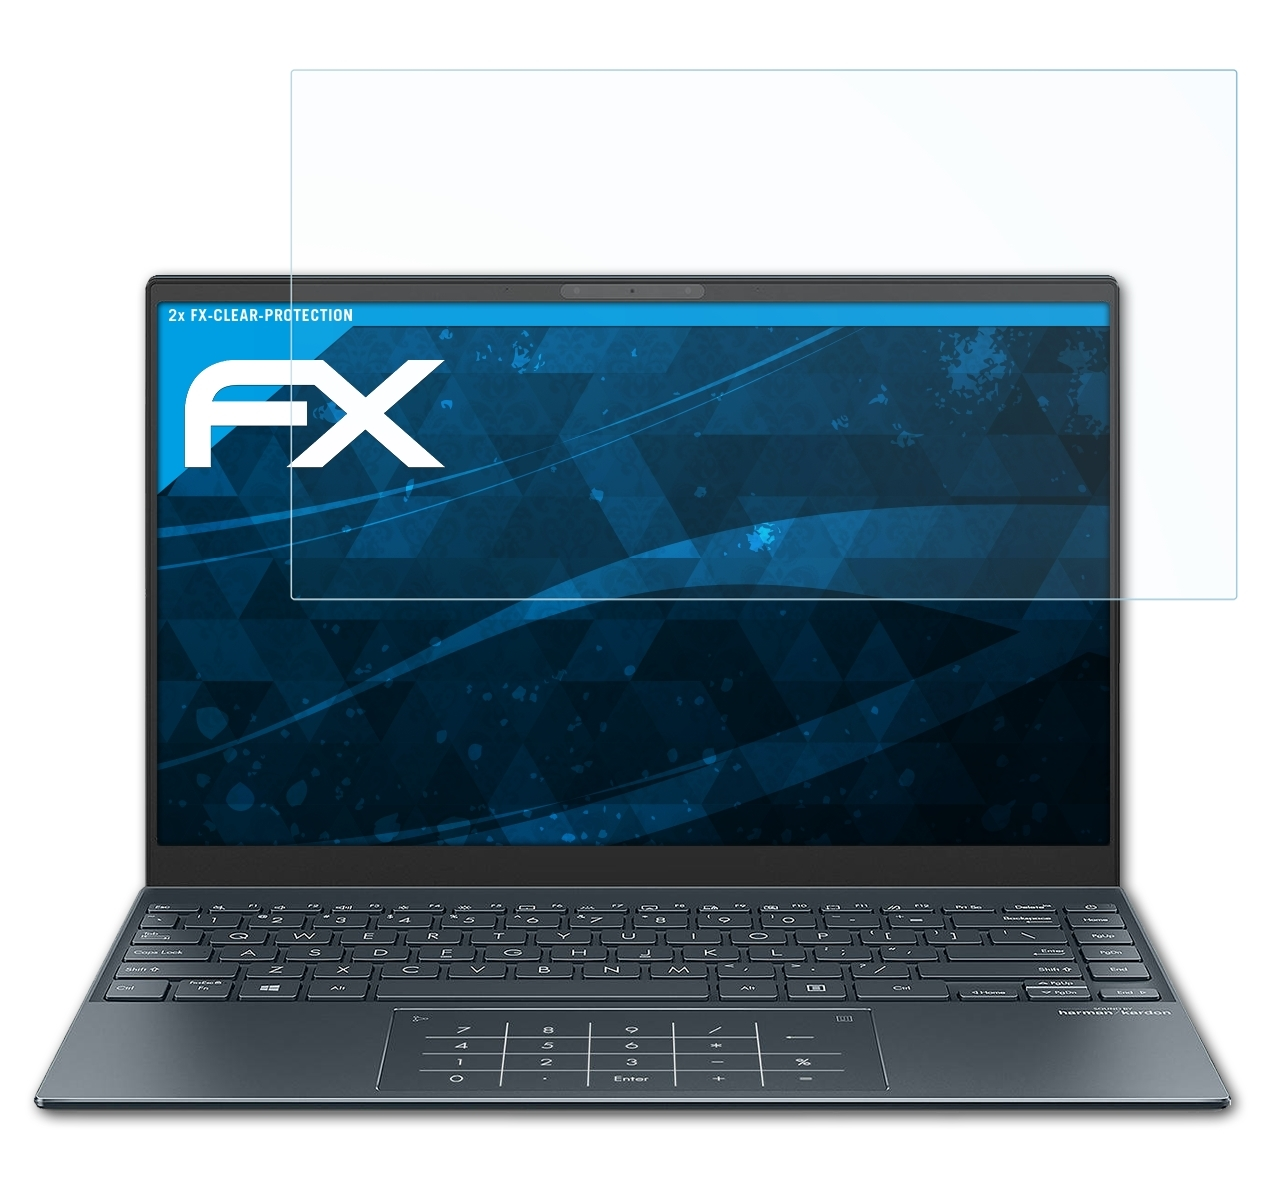 Displayschutz(für 13 ZenBook (UX325EA)) ATFOLIX FX-Clear 2x Asus